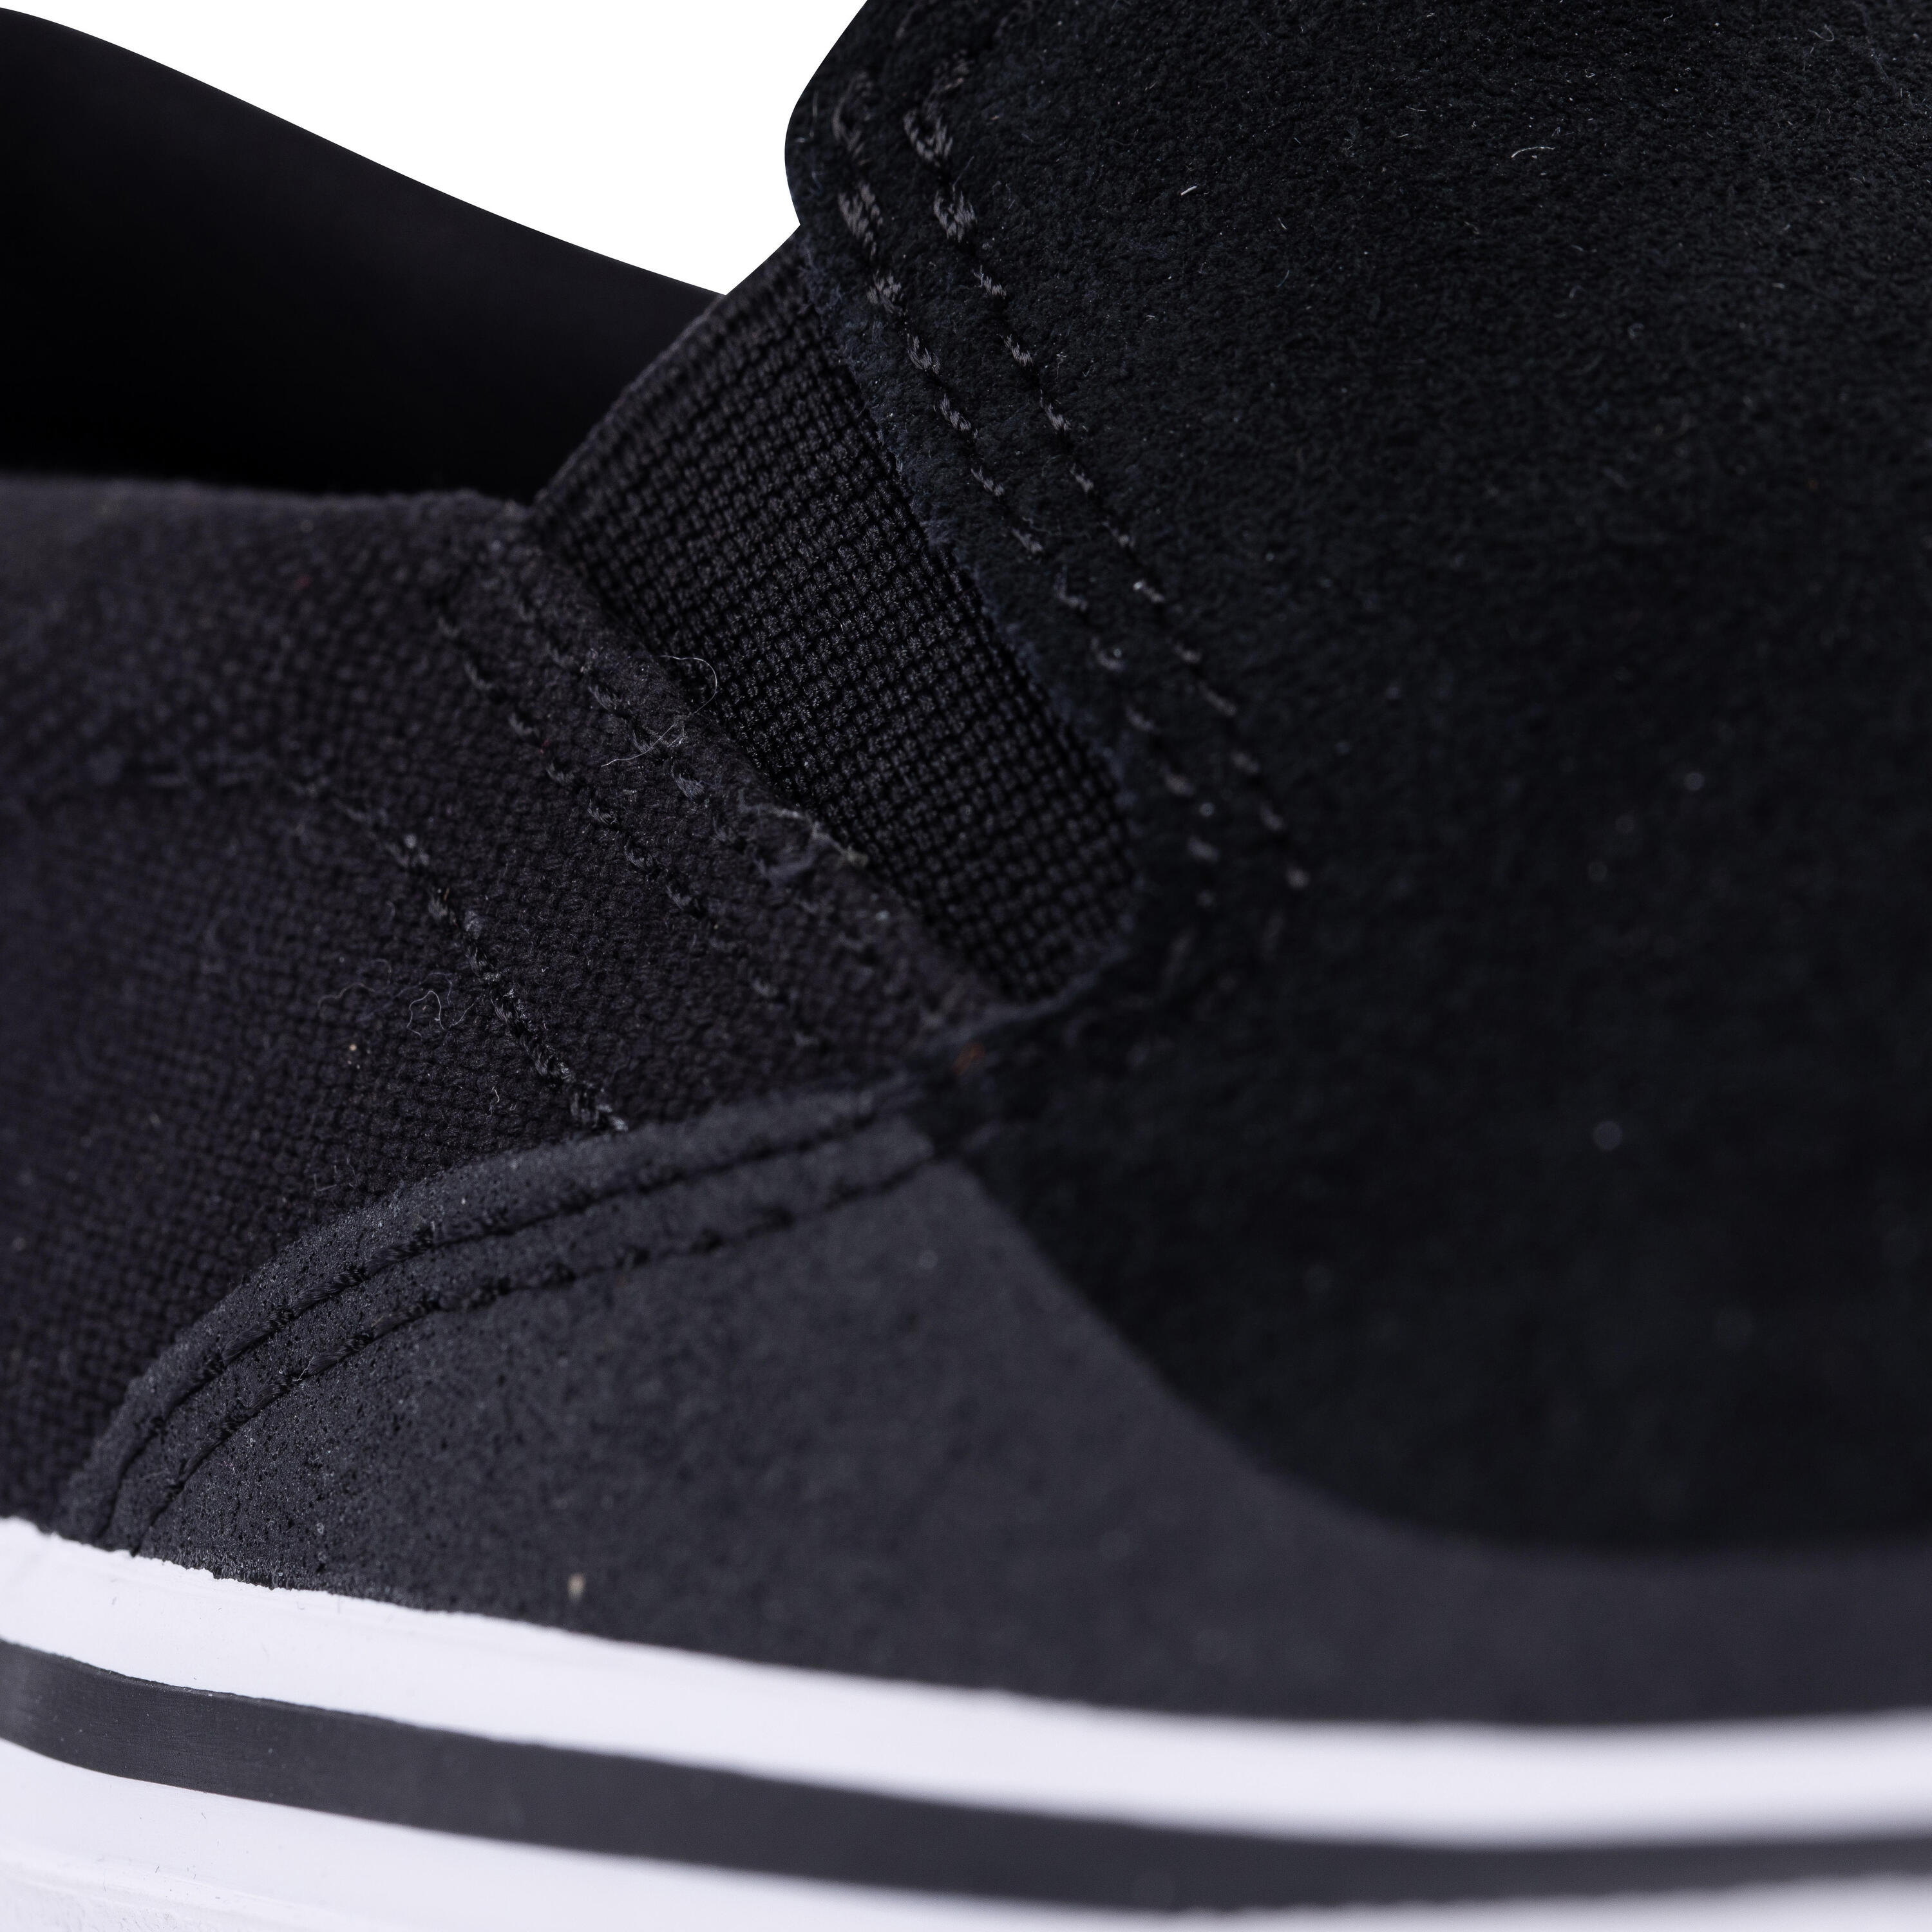 Vulca 500 Adult Low-Top Slip-On Skate Shoes - Black/White 12/12